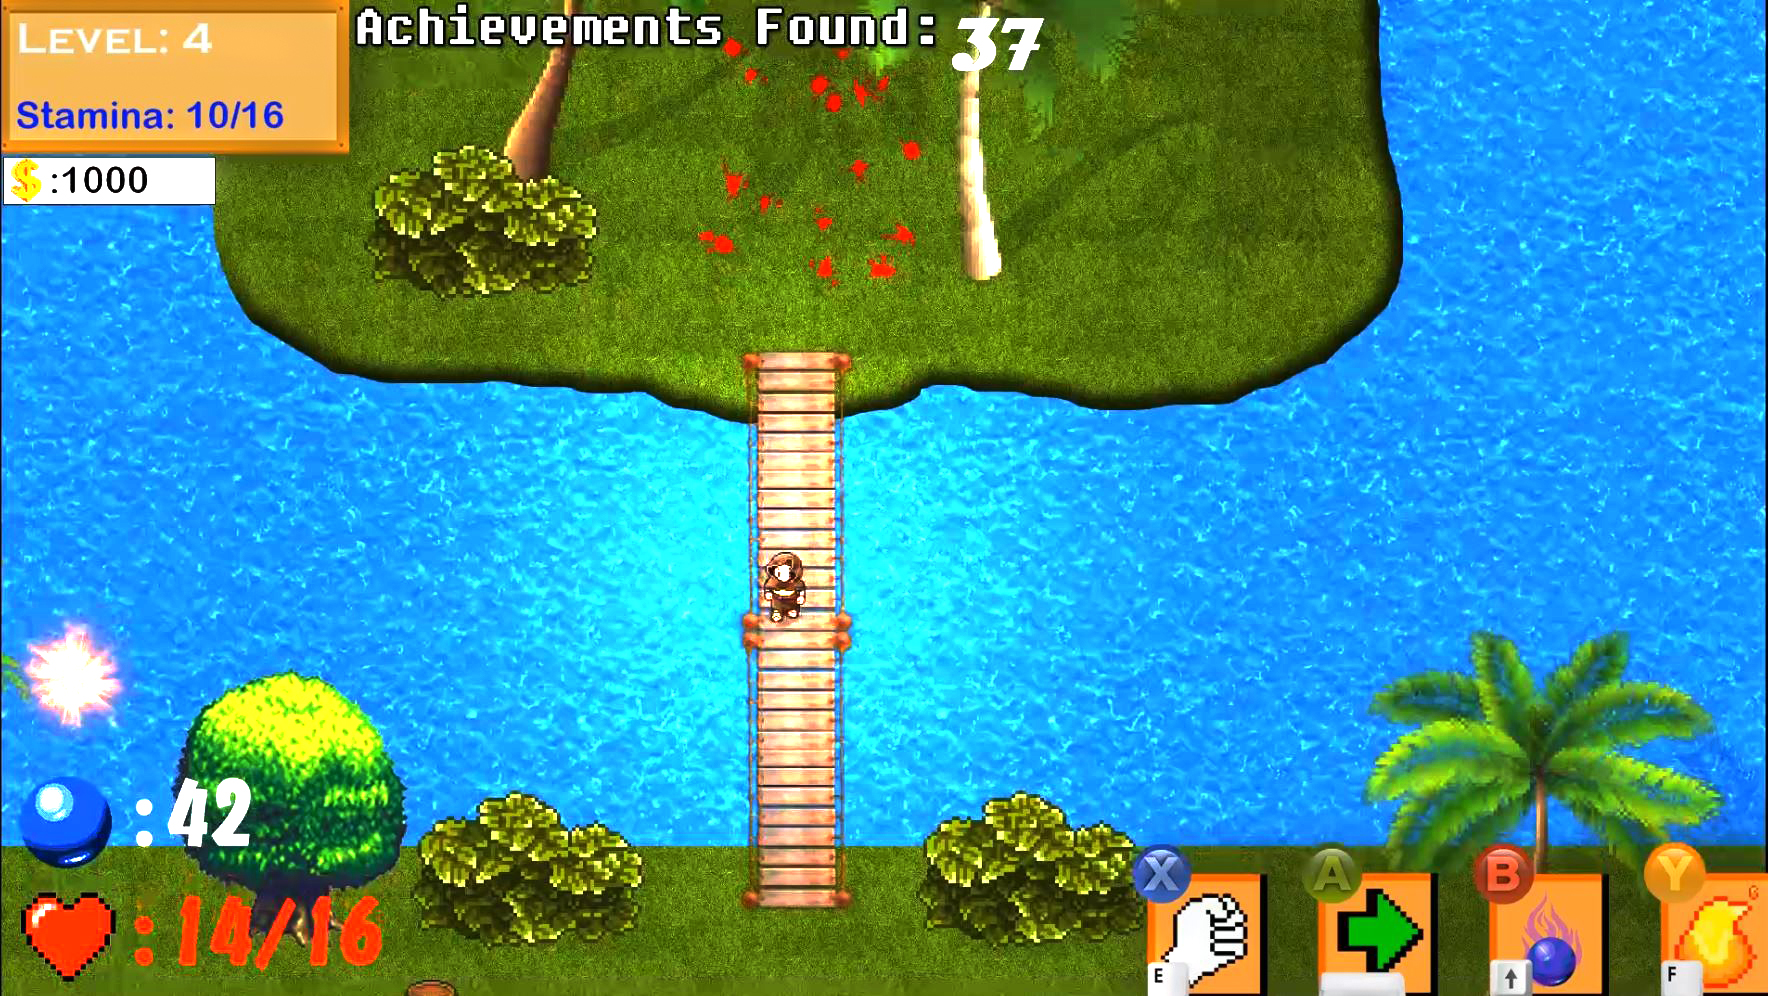 The Quest for Achievements screenshot